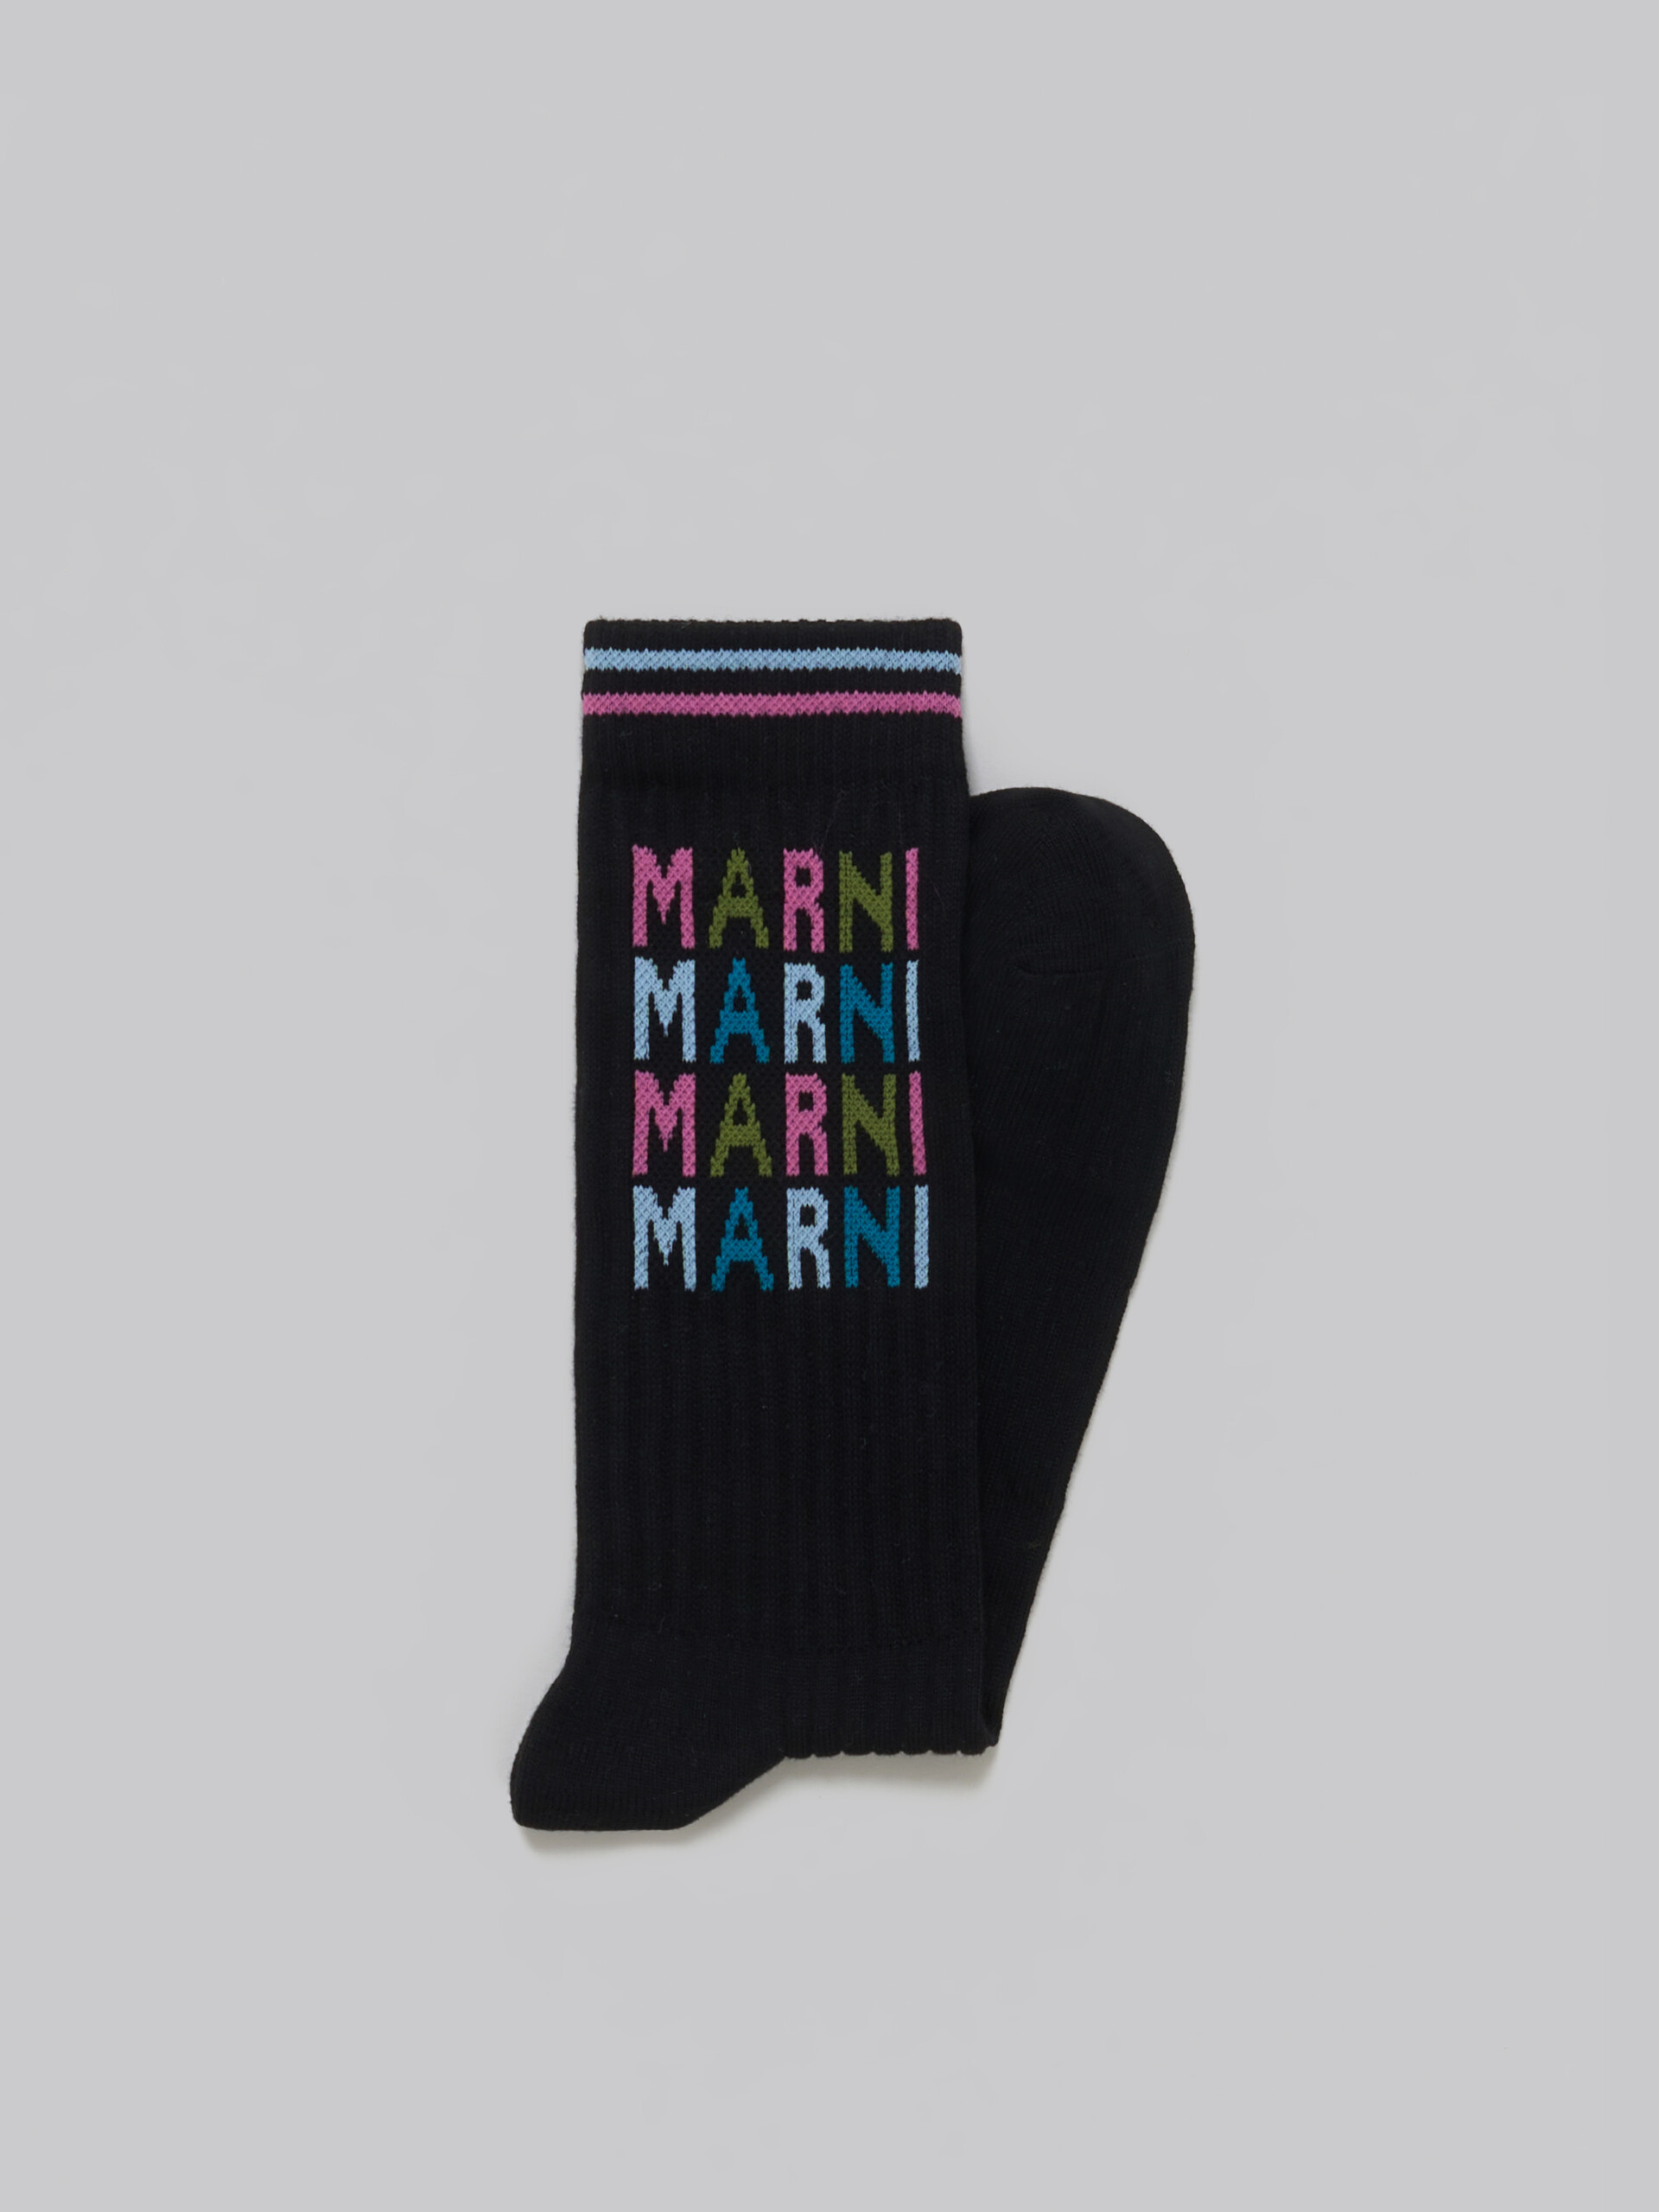 Schwarze gerippte Baumwollsocken mit bunten Logos - Socken - Image 2